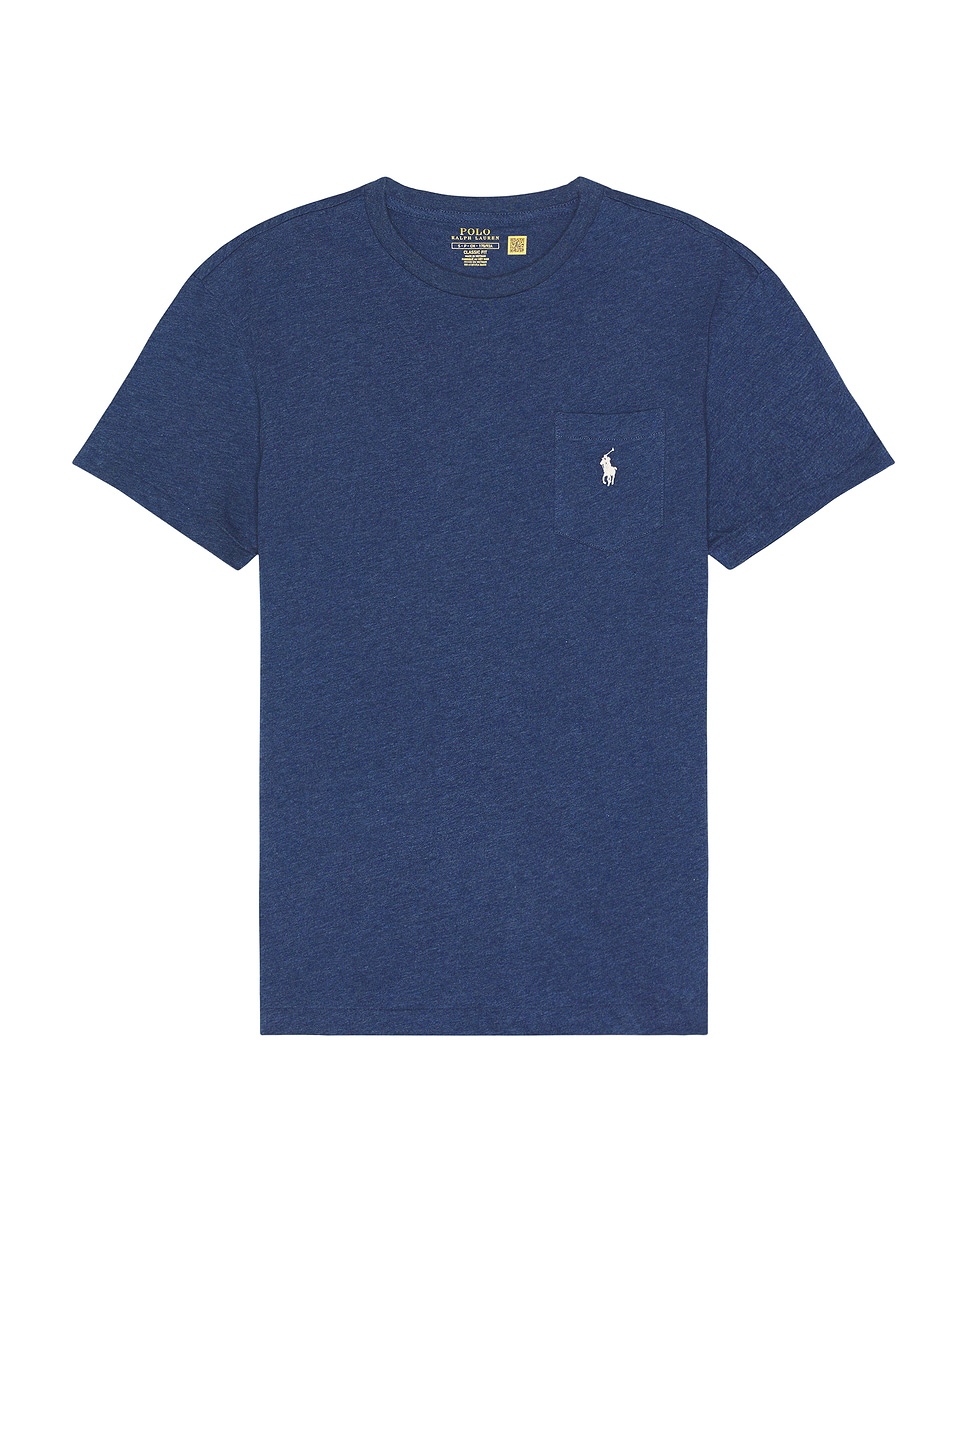 Image 1 of Polo Ralph Lauren Crewneck Pocket T-shirt in Derby Blue Heather